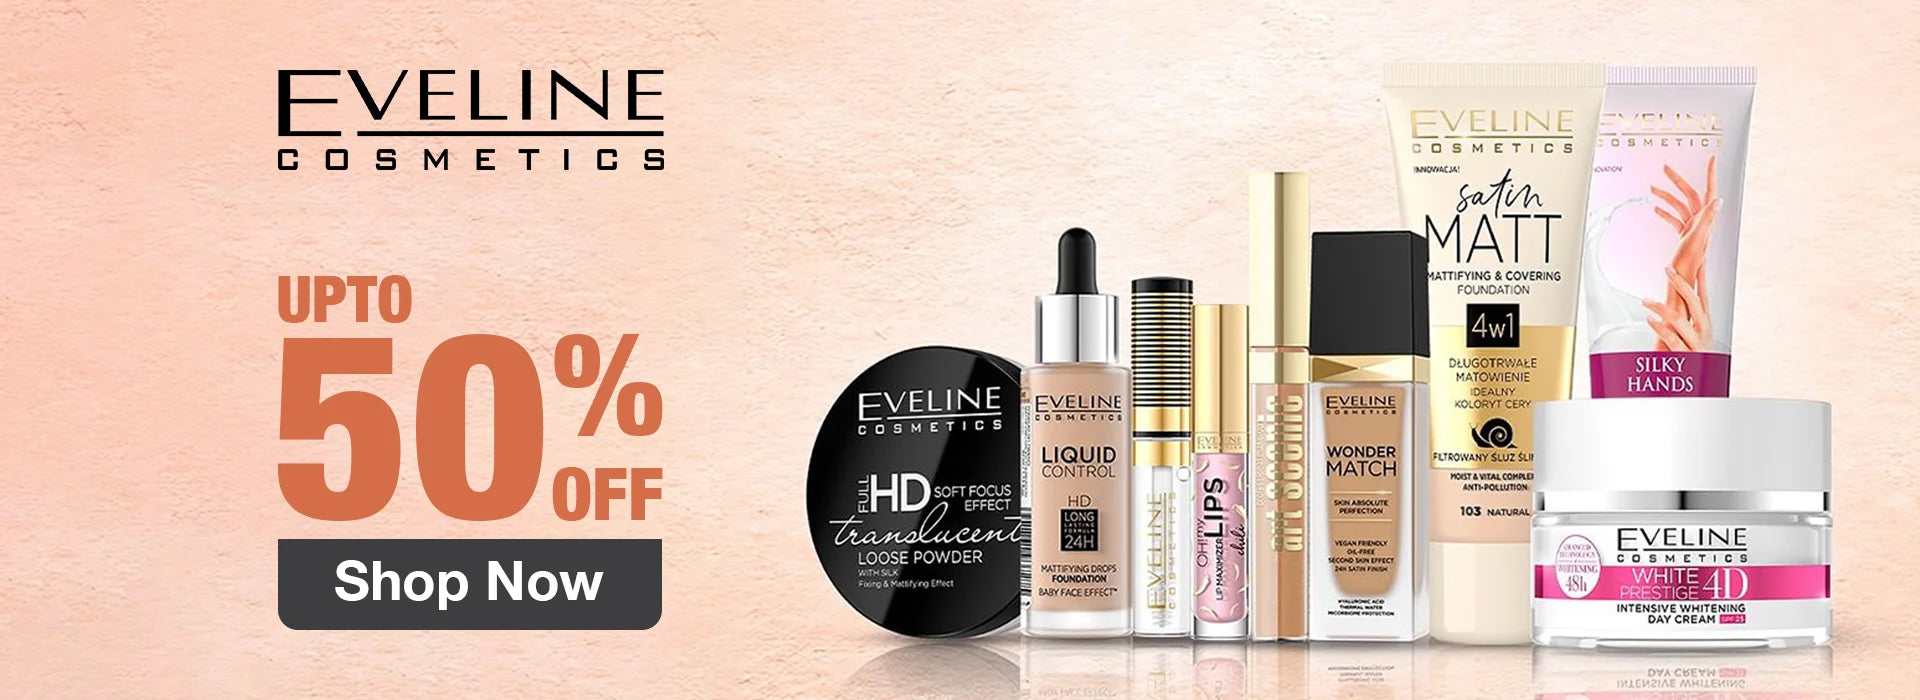 Eveline Cosmetics | Upto 50% Off